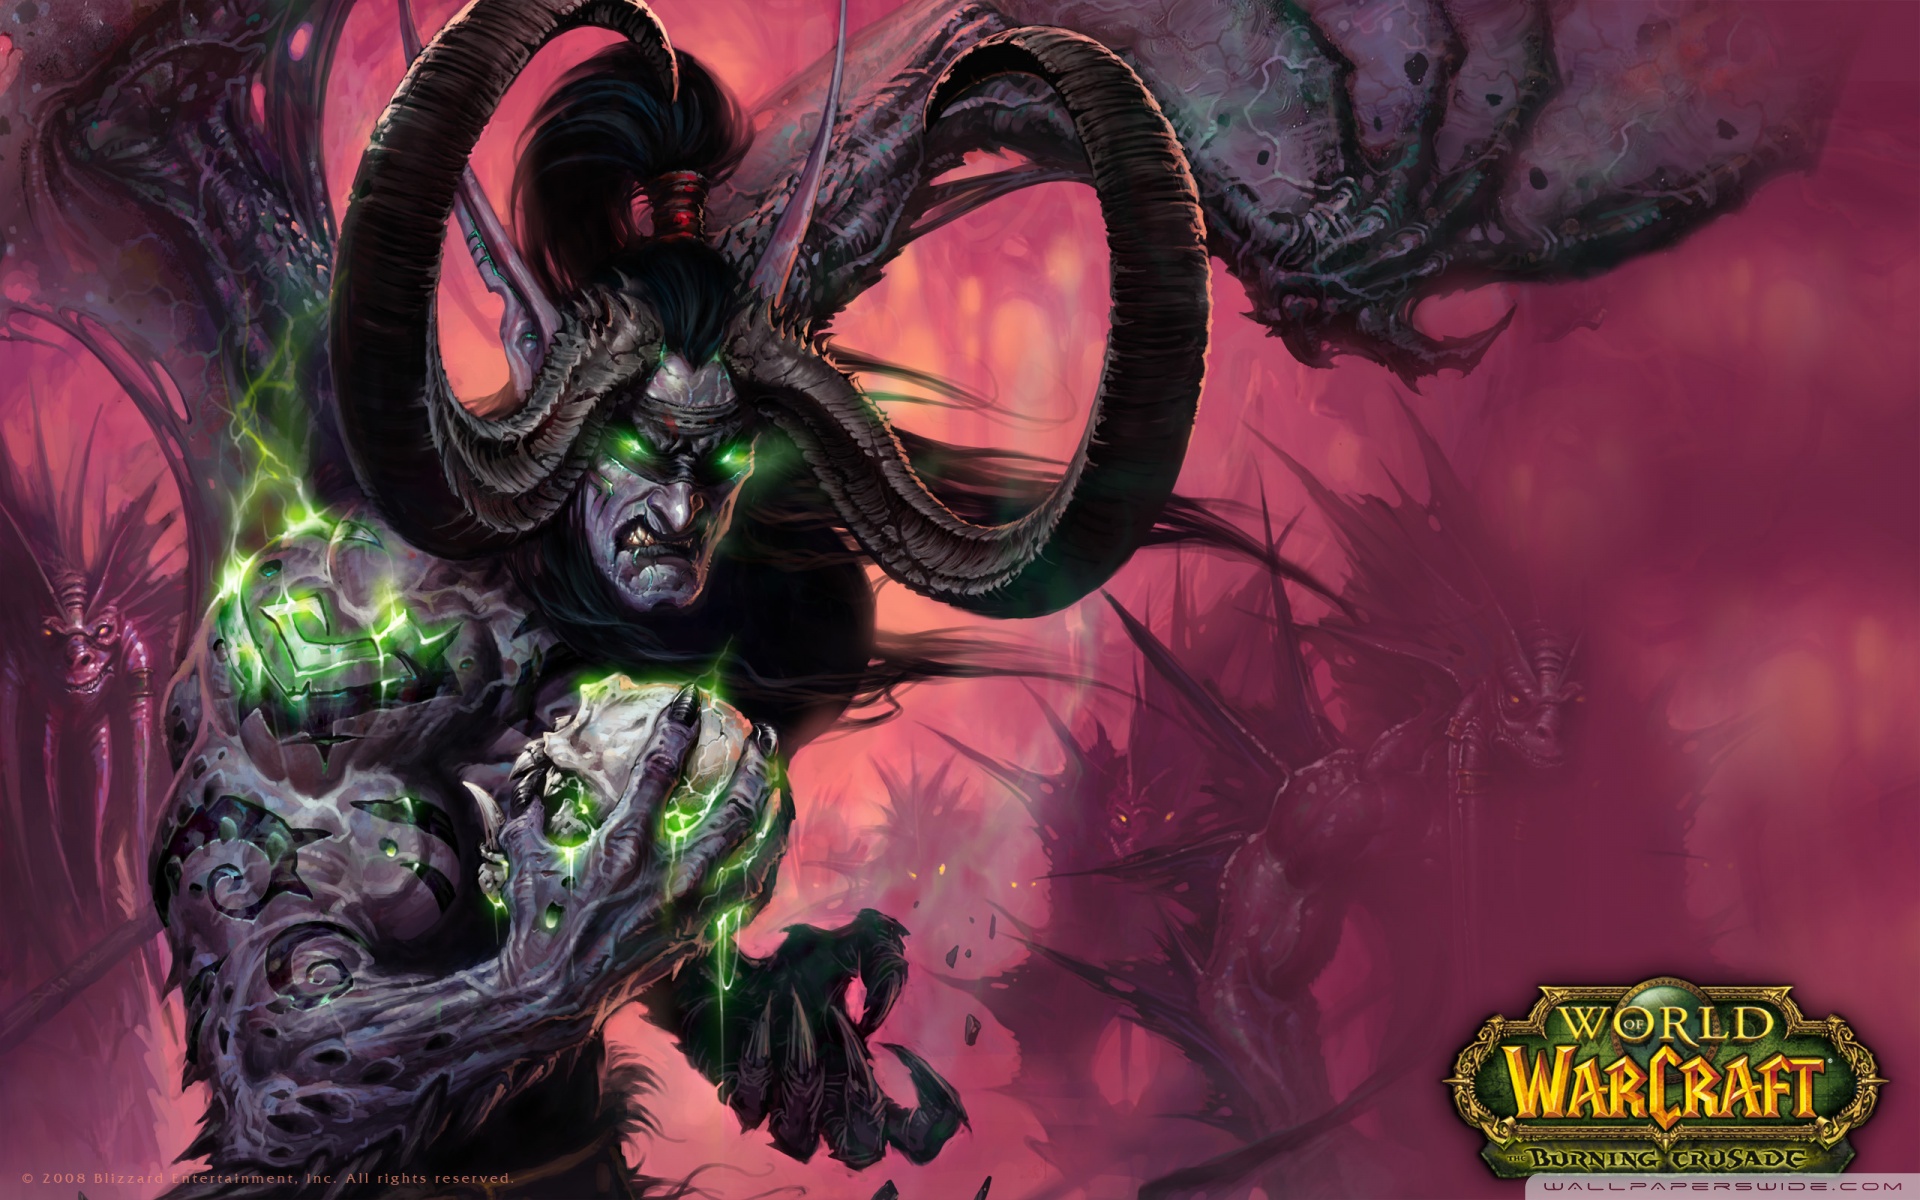 World Of Warcraft: The Burning Crusade #5